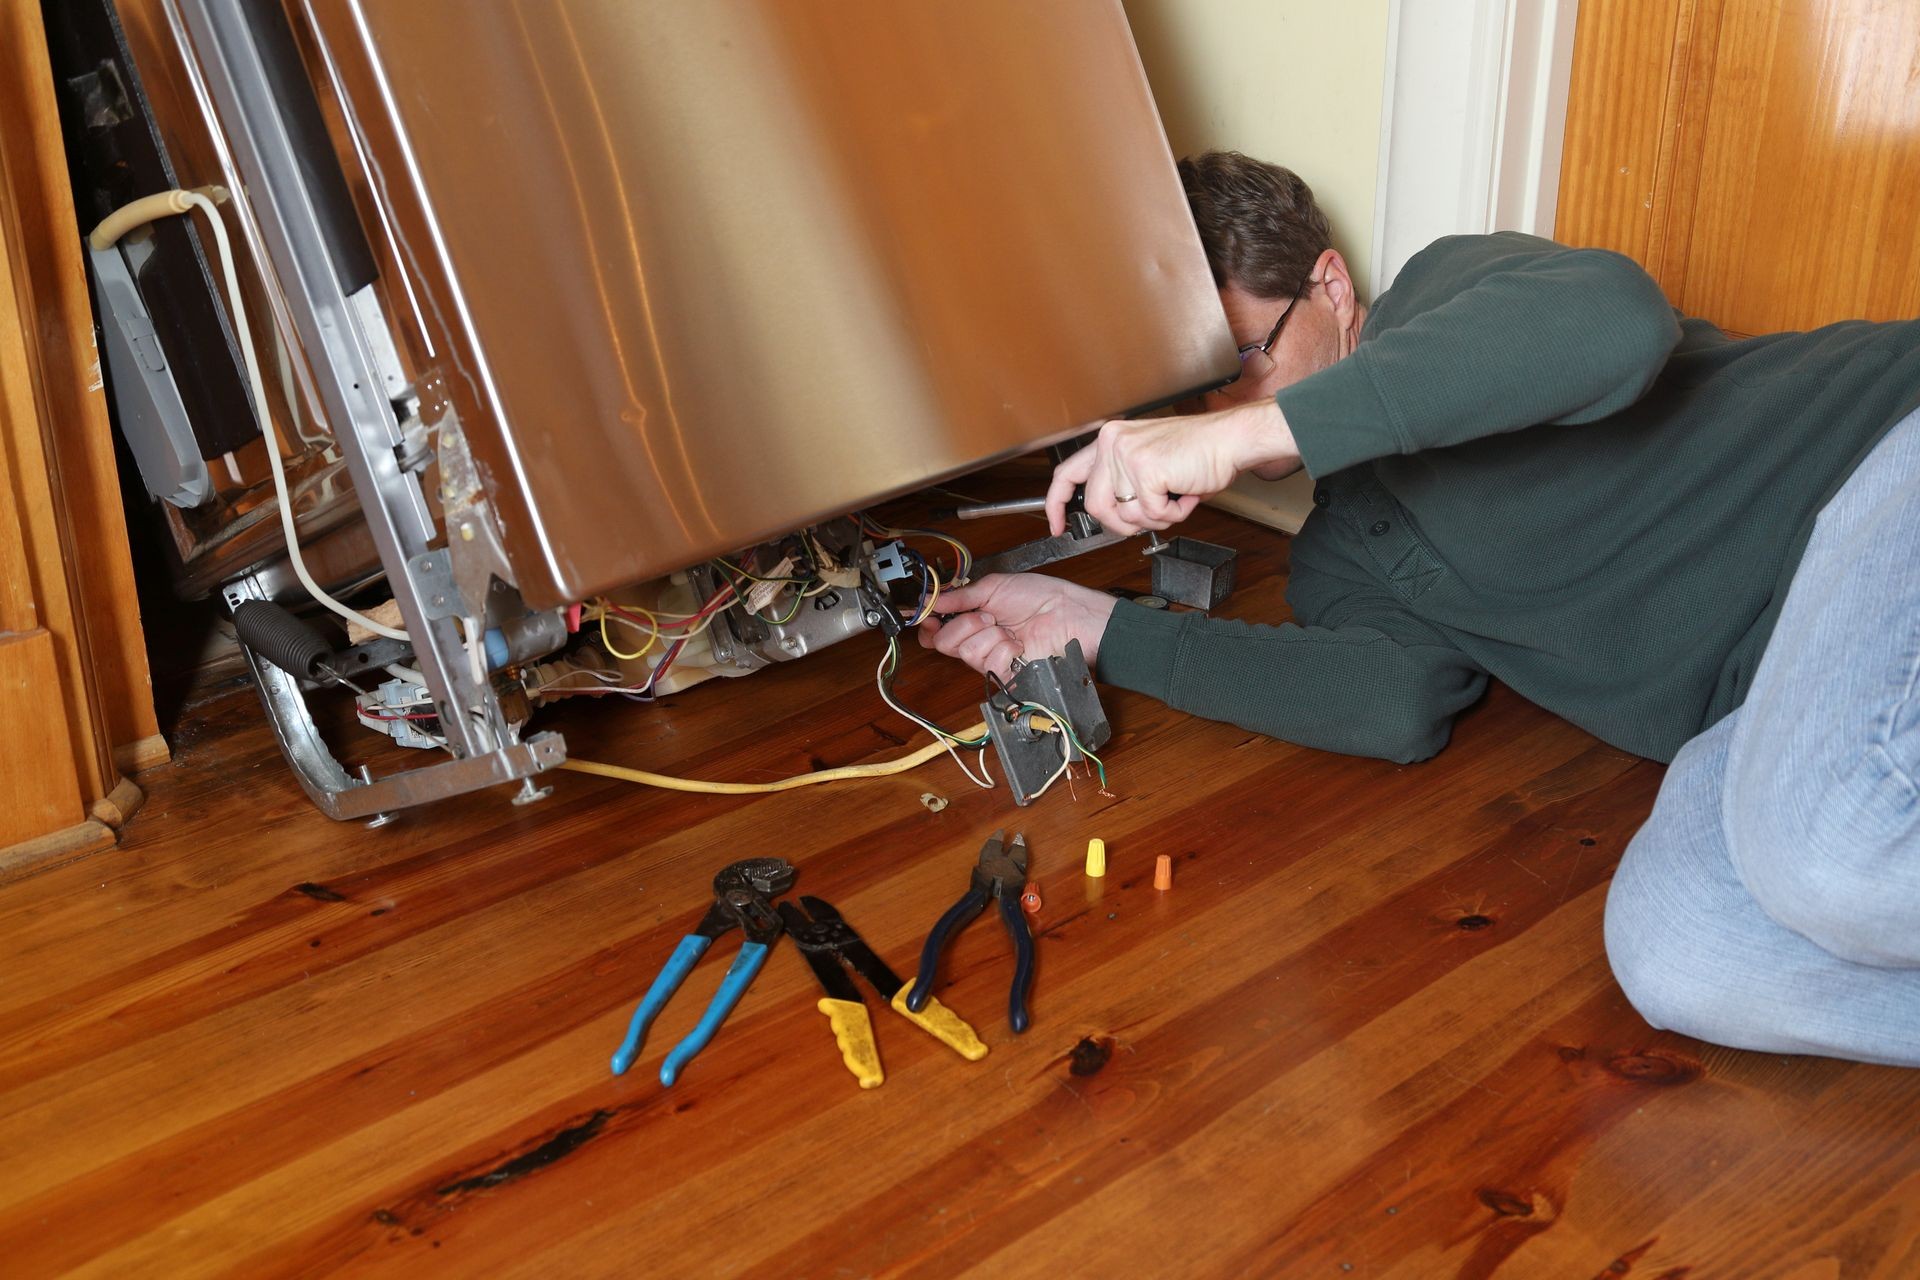 Maintenance technician repairs borken dishwasher appliance in a house